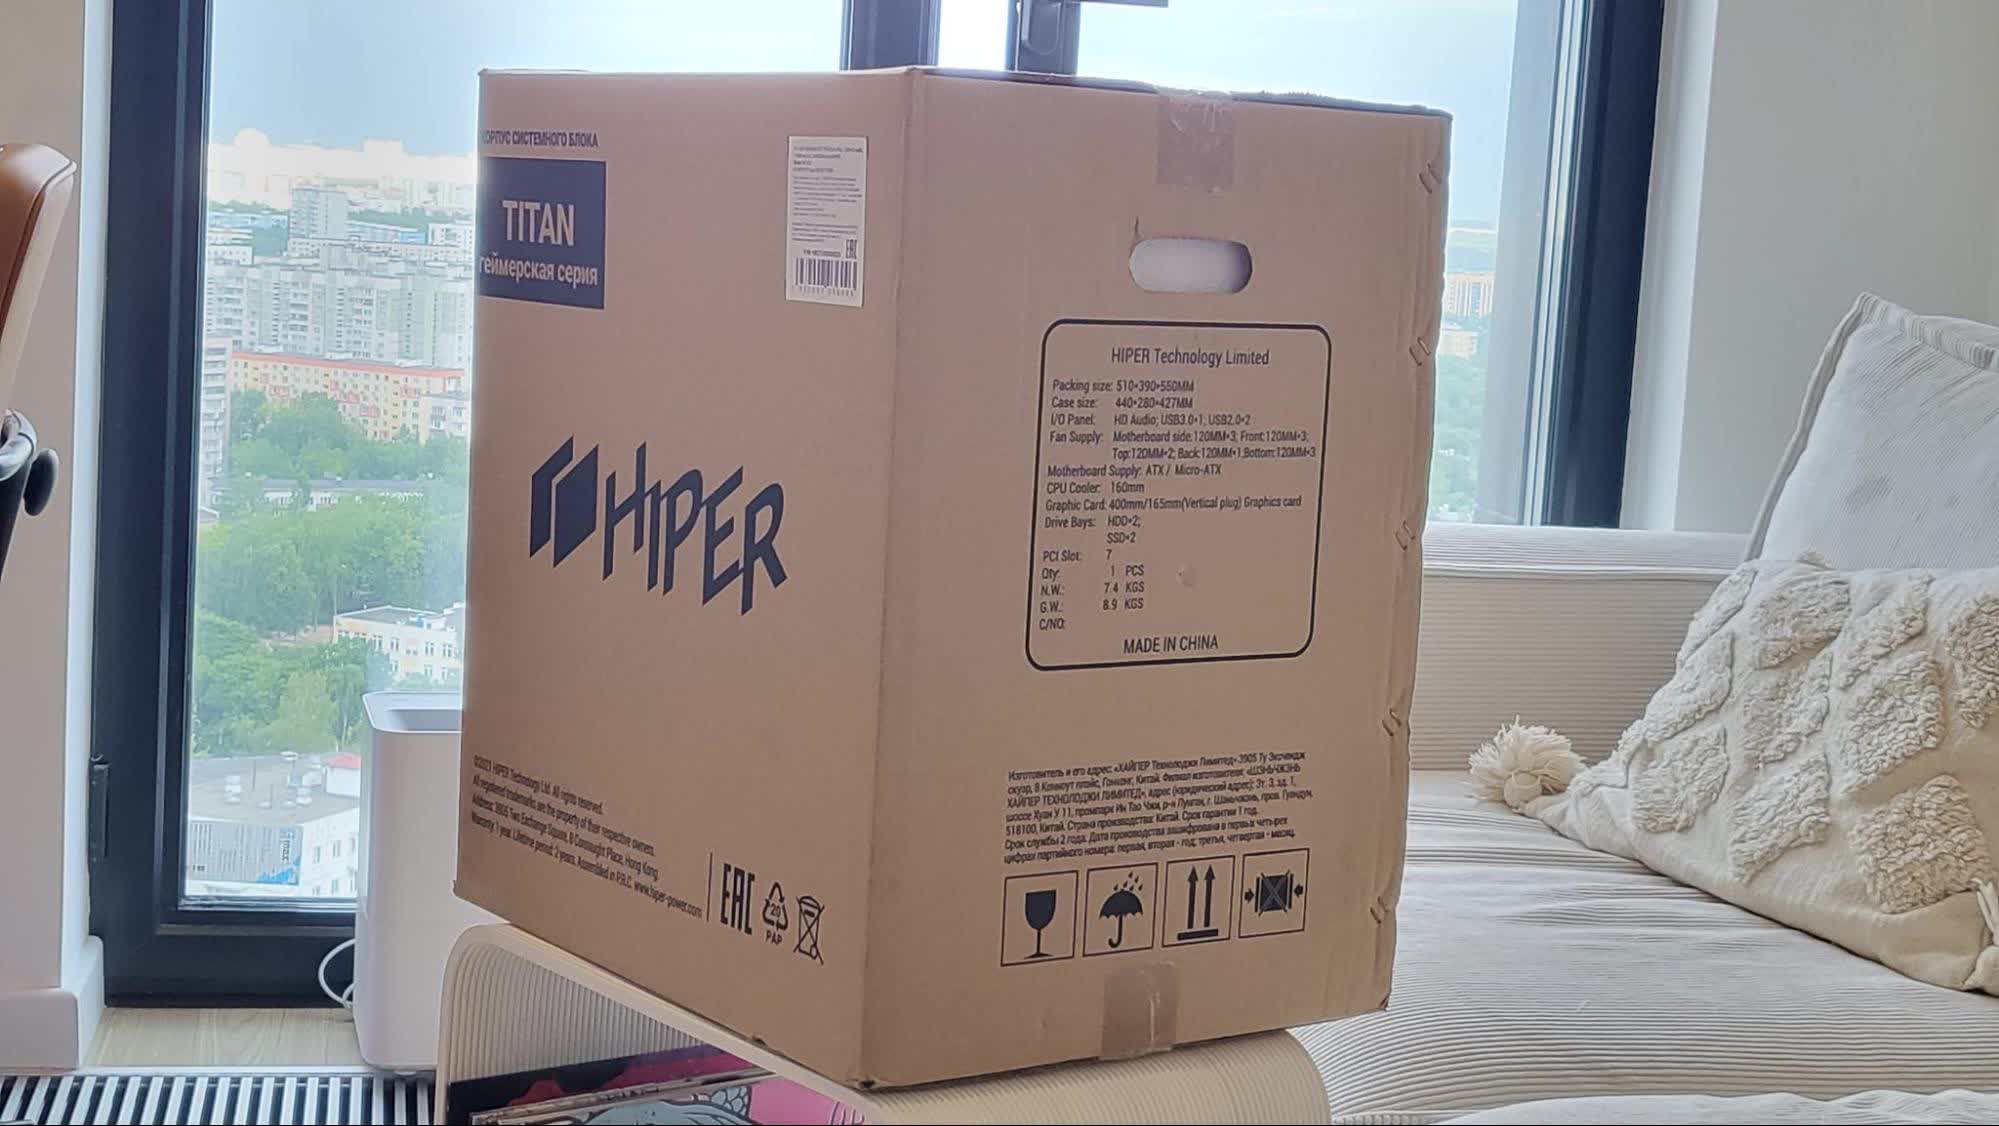 HIPER MG102 Titan Gamer Case Review